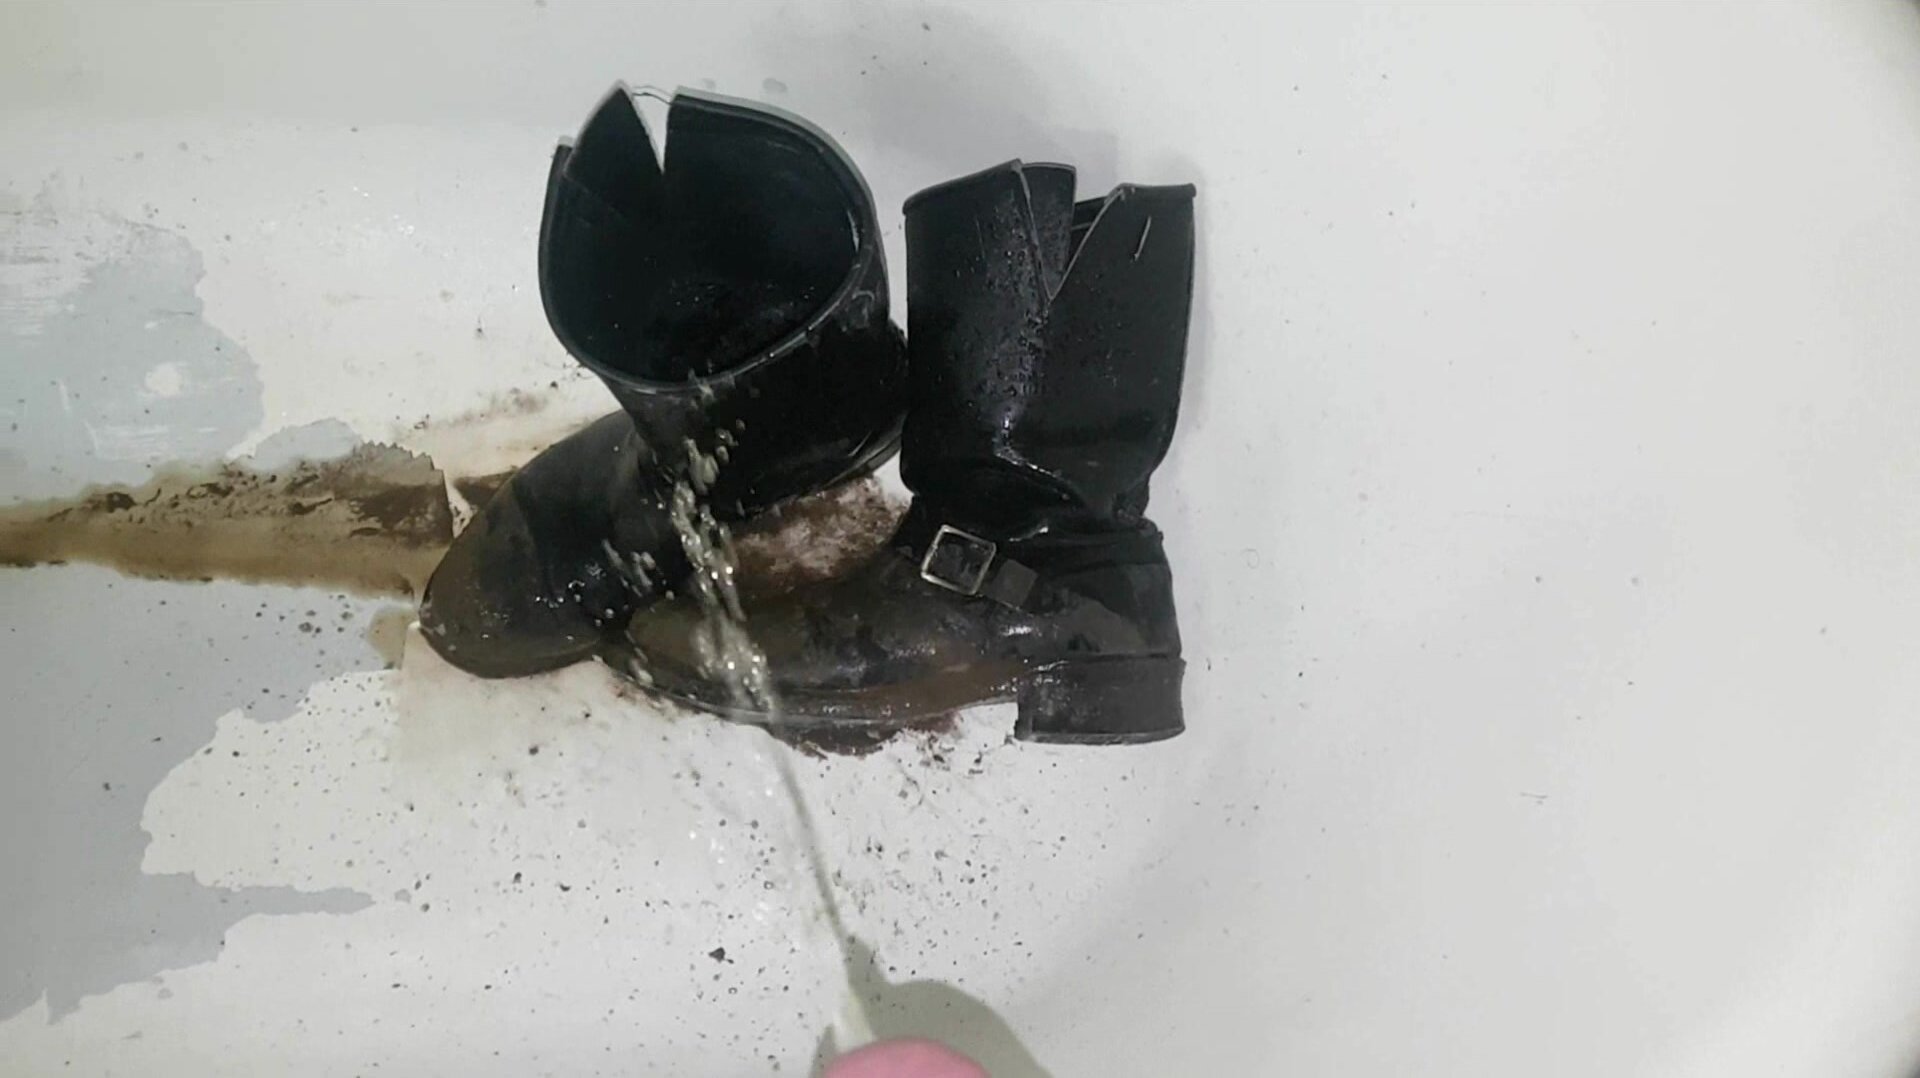 Piss-washing mud off engineer boots